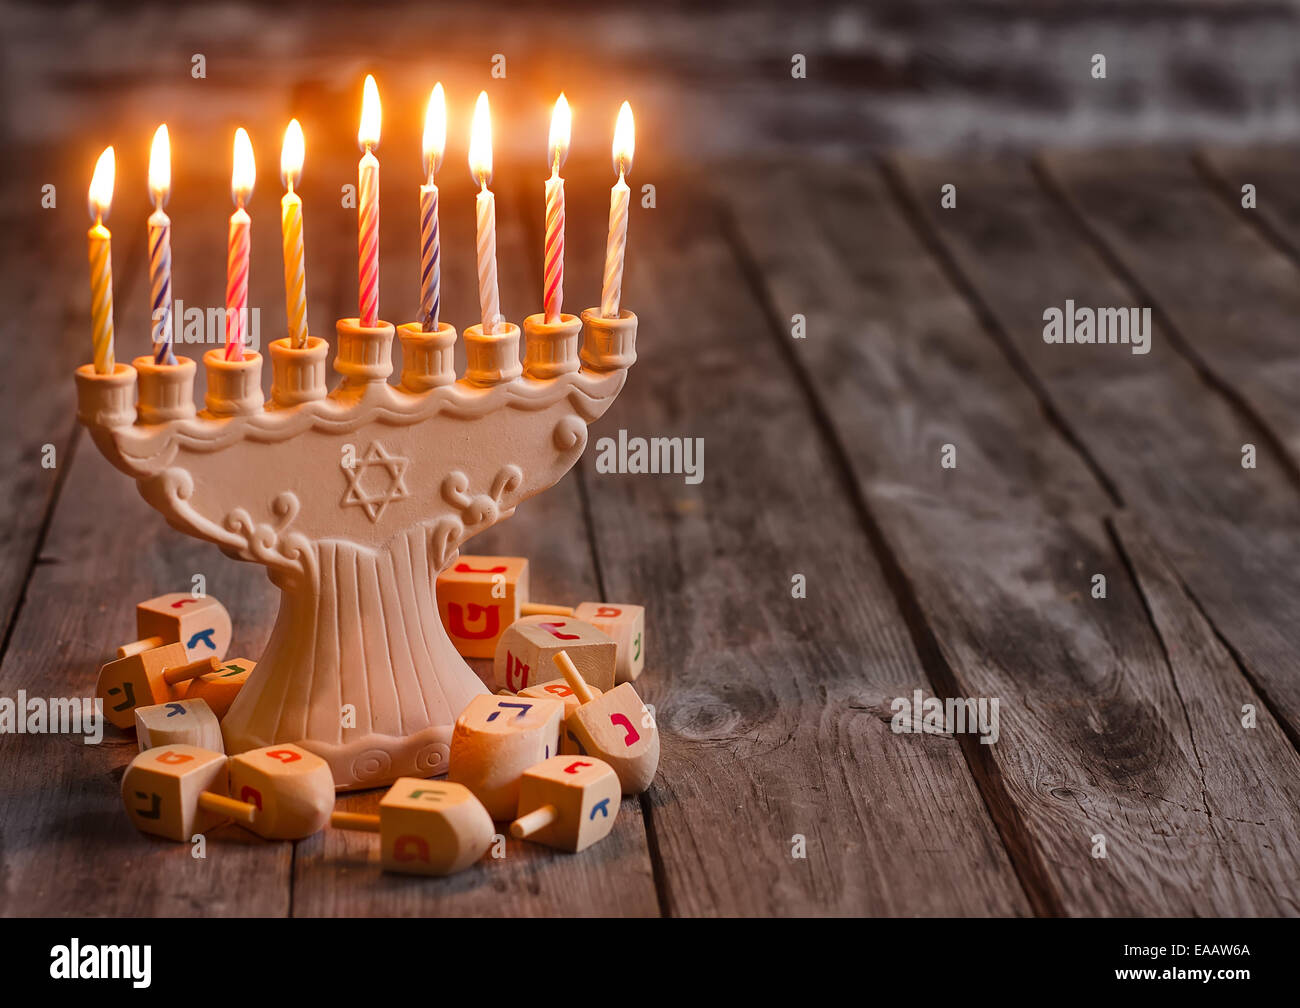 Jewish holiday hannukah symbols - menorah and wooden dreidels. Copy space background. Stock Photo